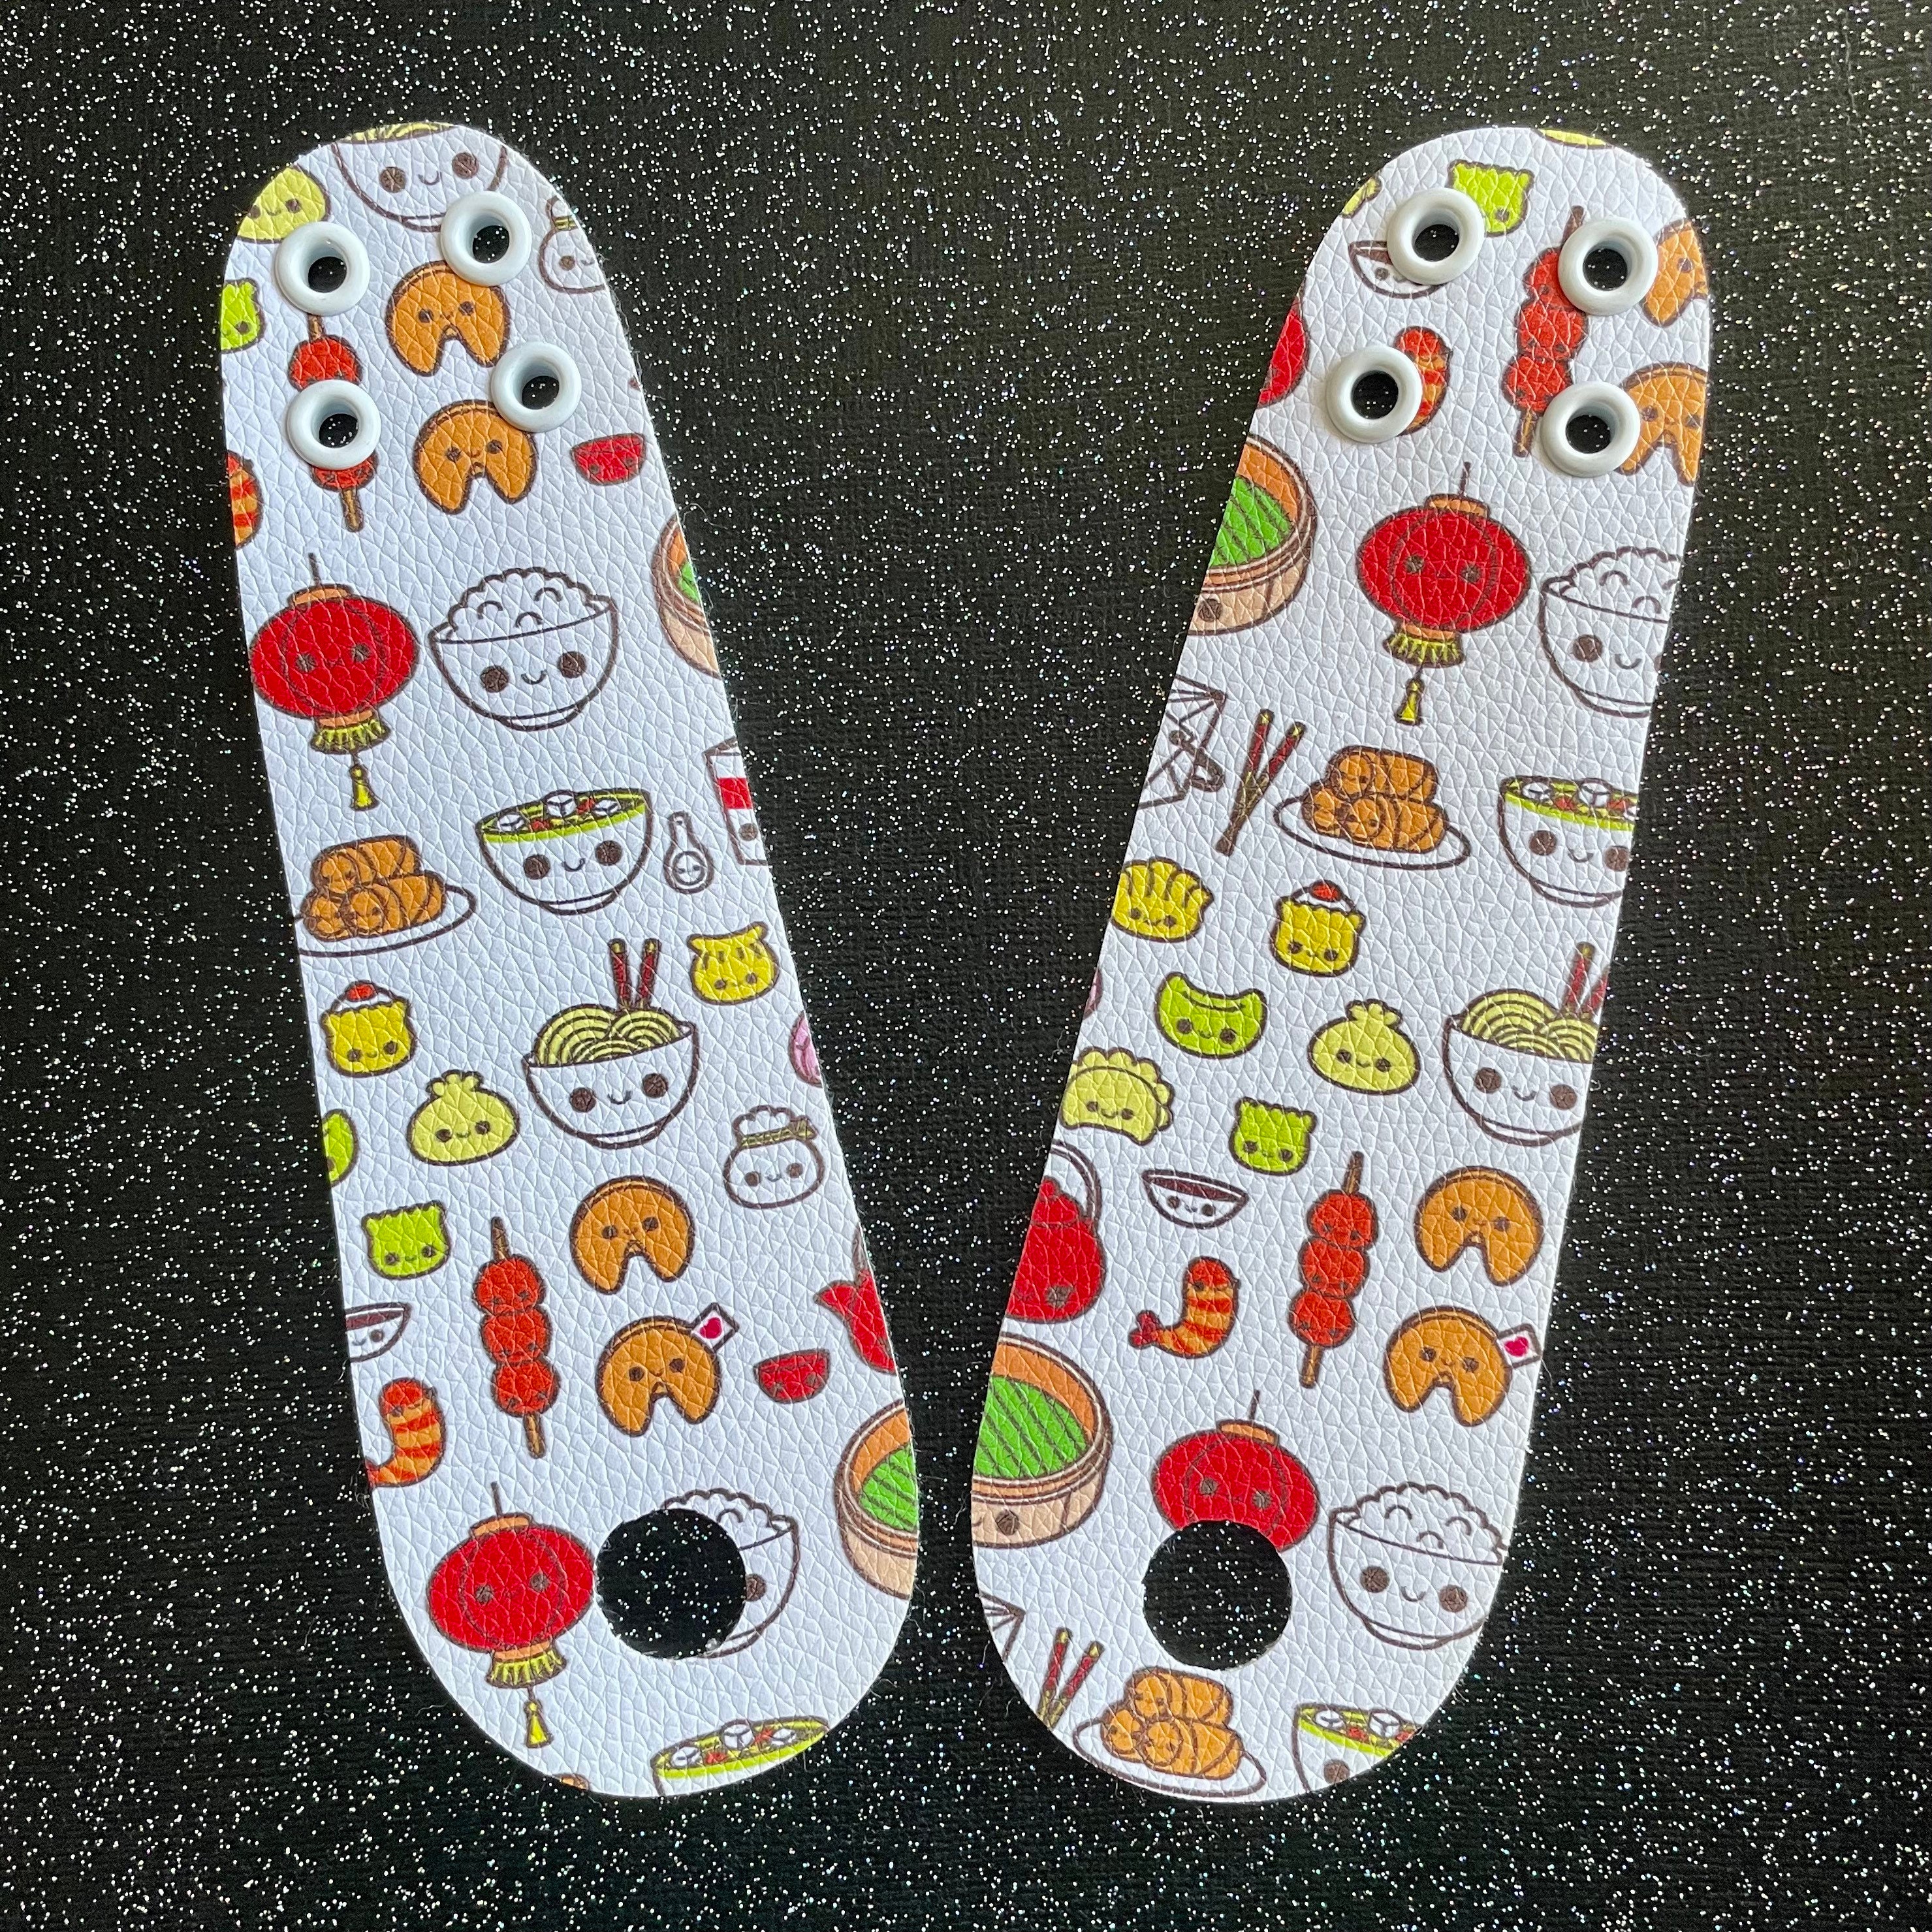 Take Out Roller Skate Toe Guard Pair - Ramen Sushi Toe Strip For Skates Skate Cap